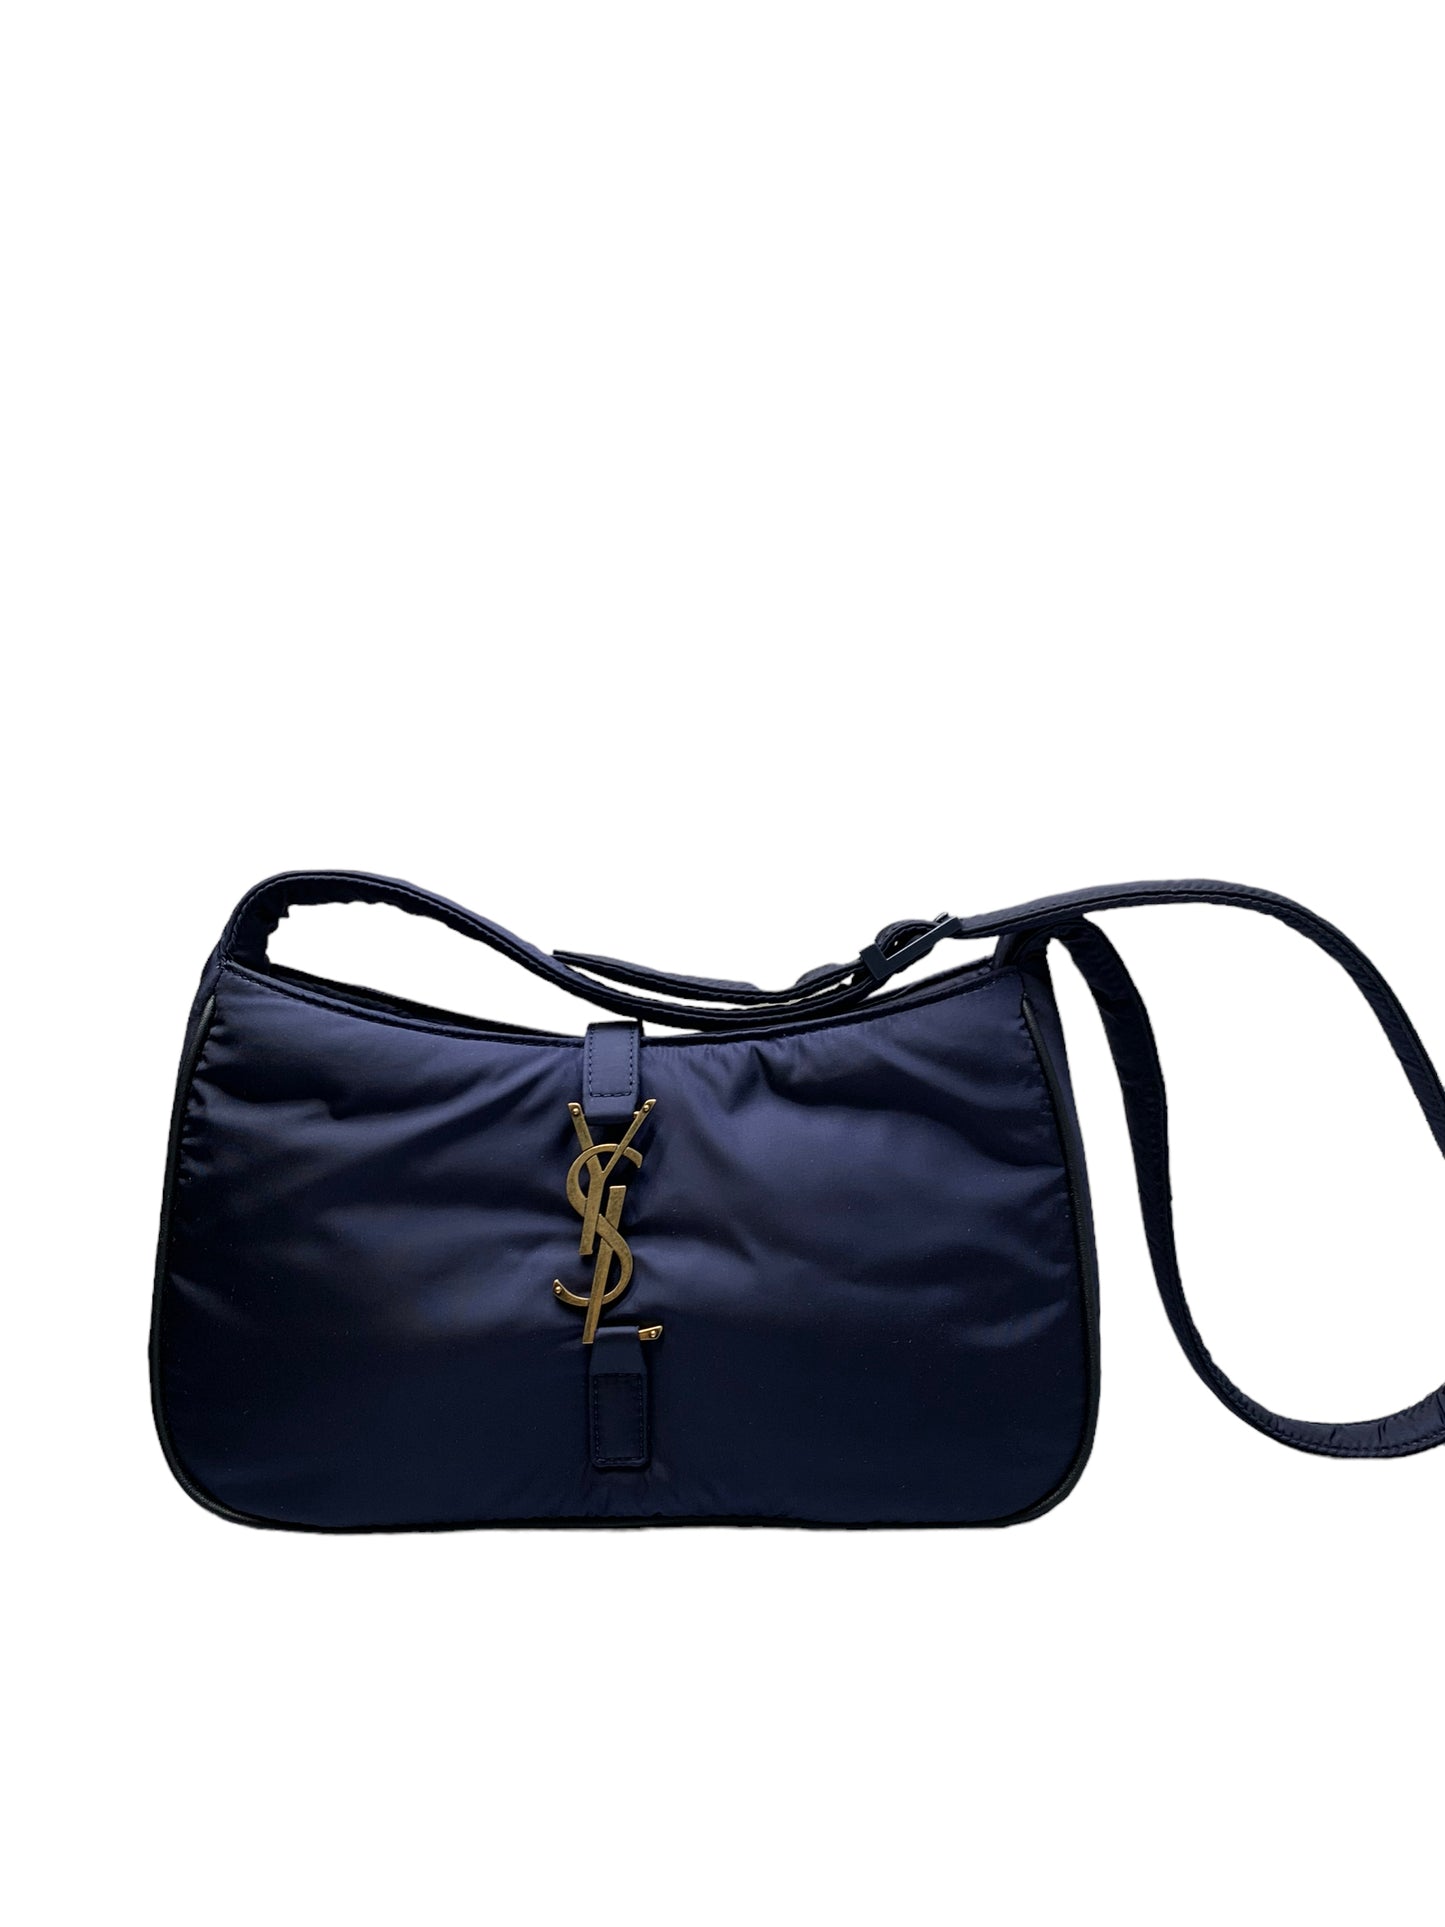 SAINT LAURENT - 5 A 7 YSL Nylon Shoulder Bag